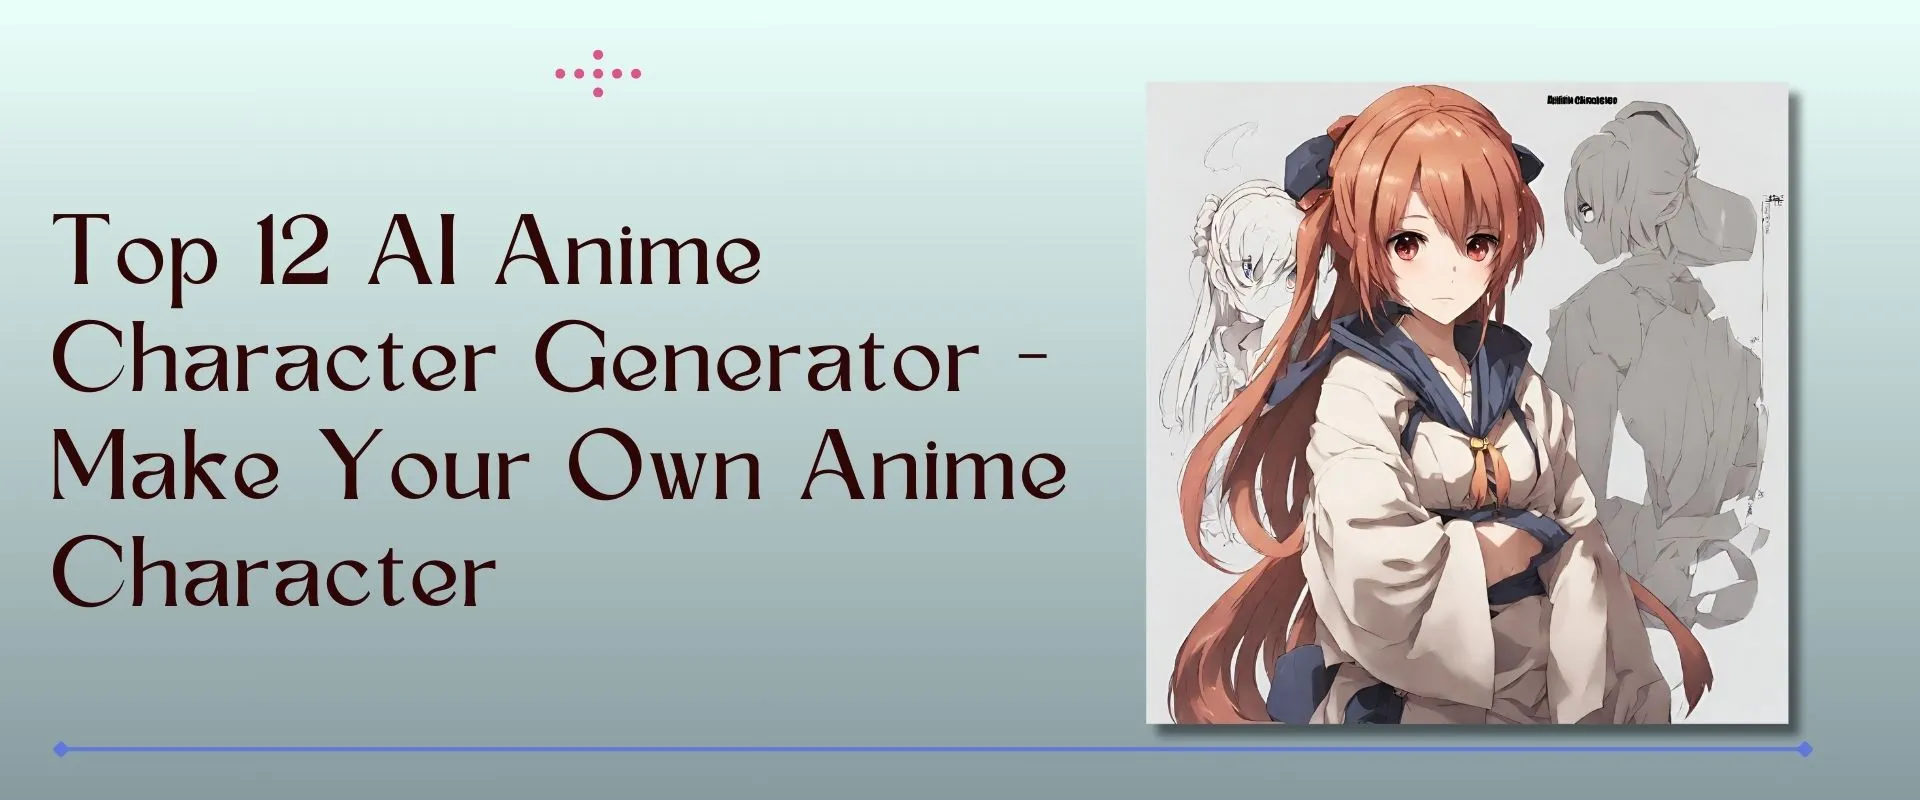 ai anime character generator